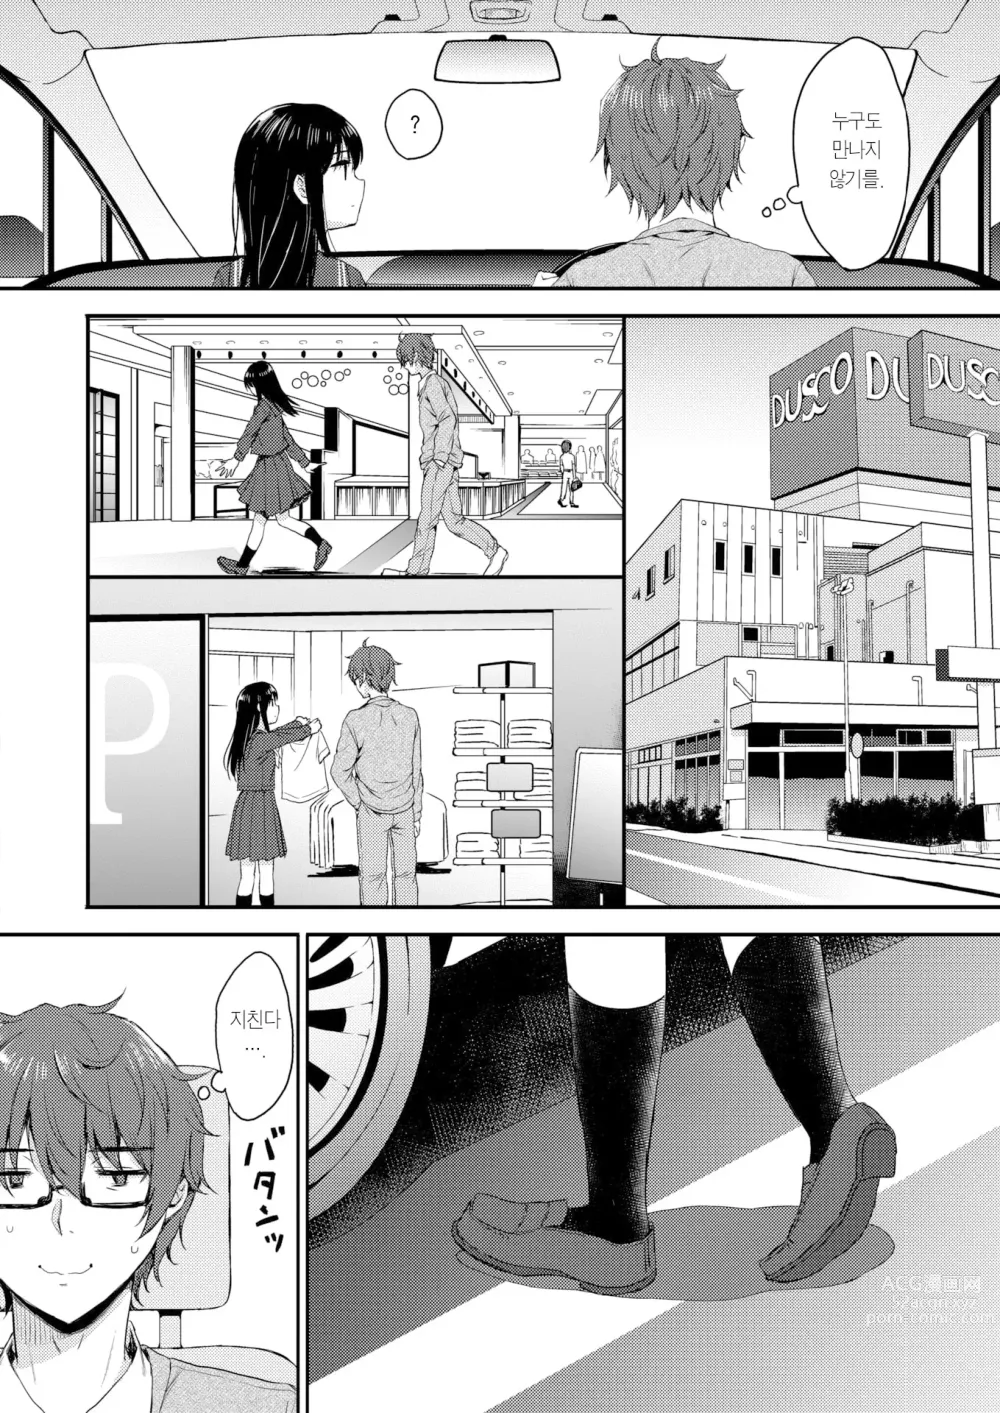 Page 3 of manga 블루 데이지 어나더